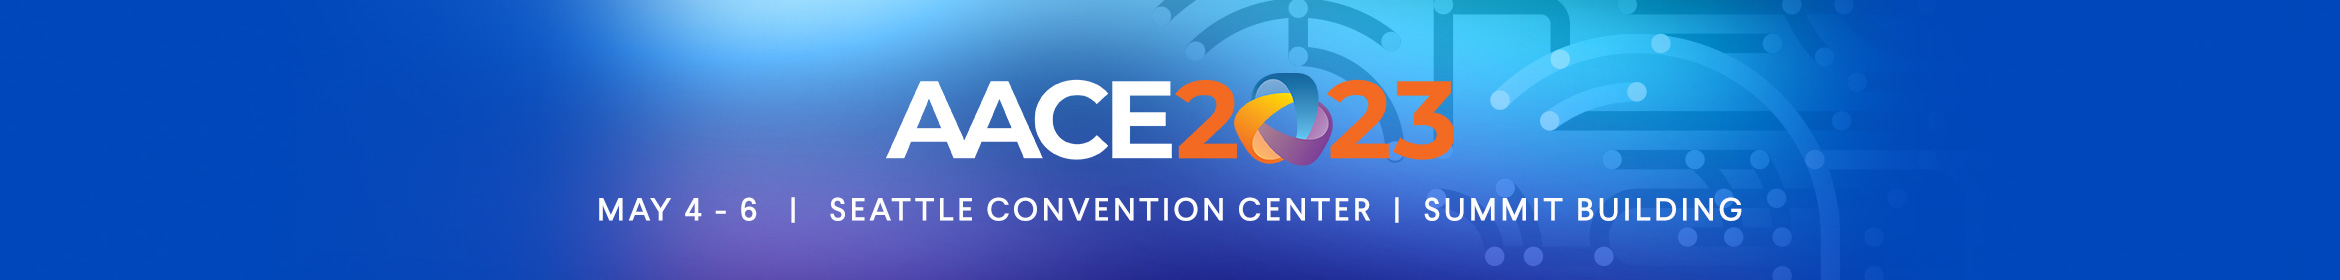 AACE 2023 Main banner